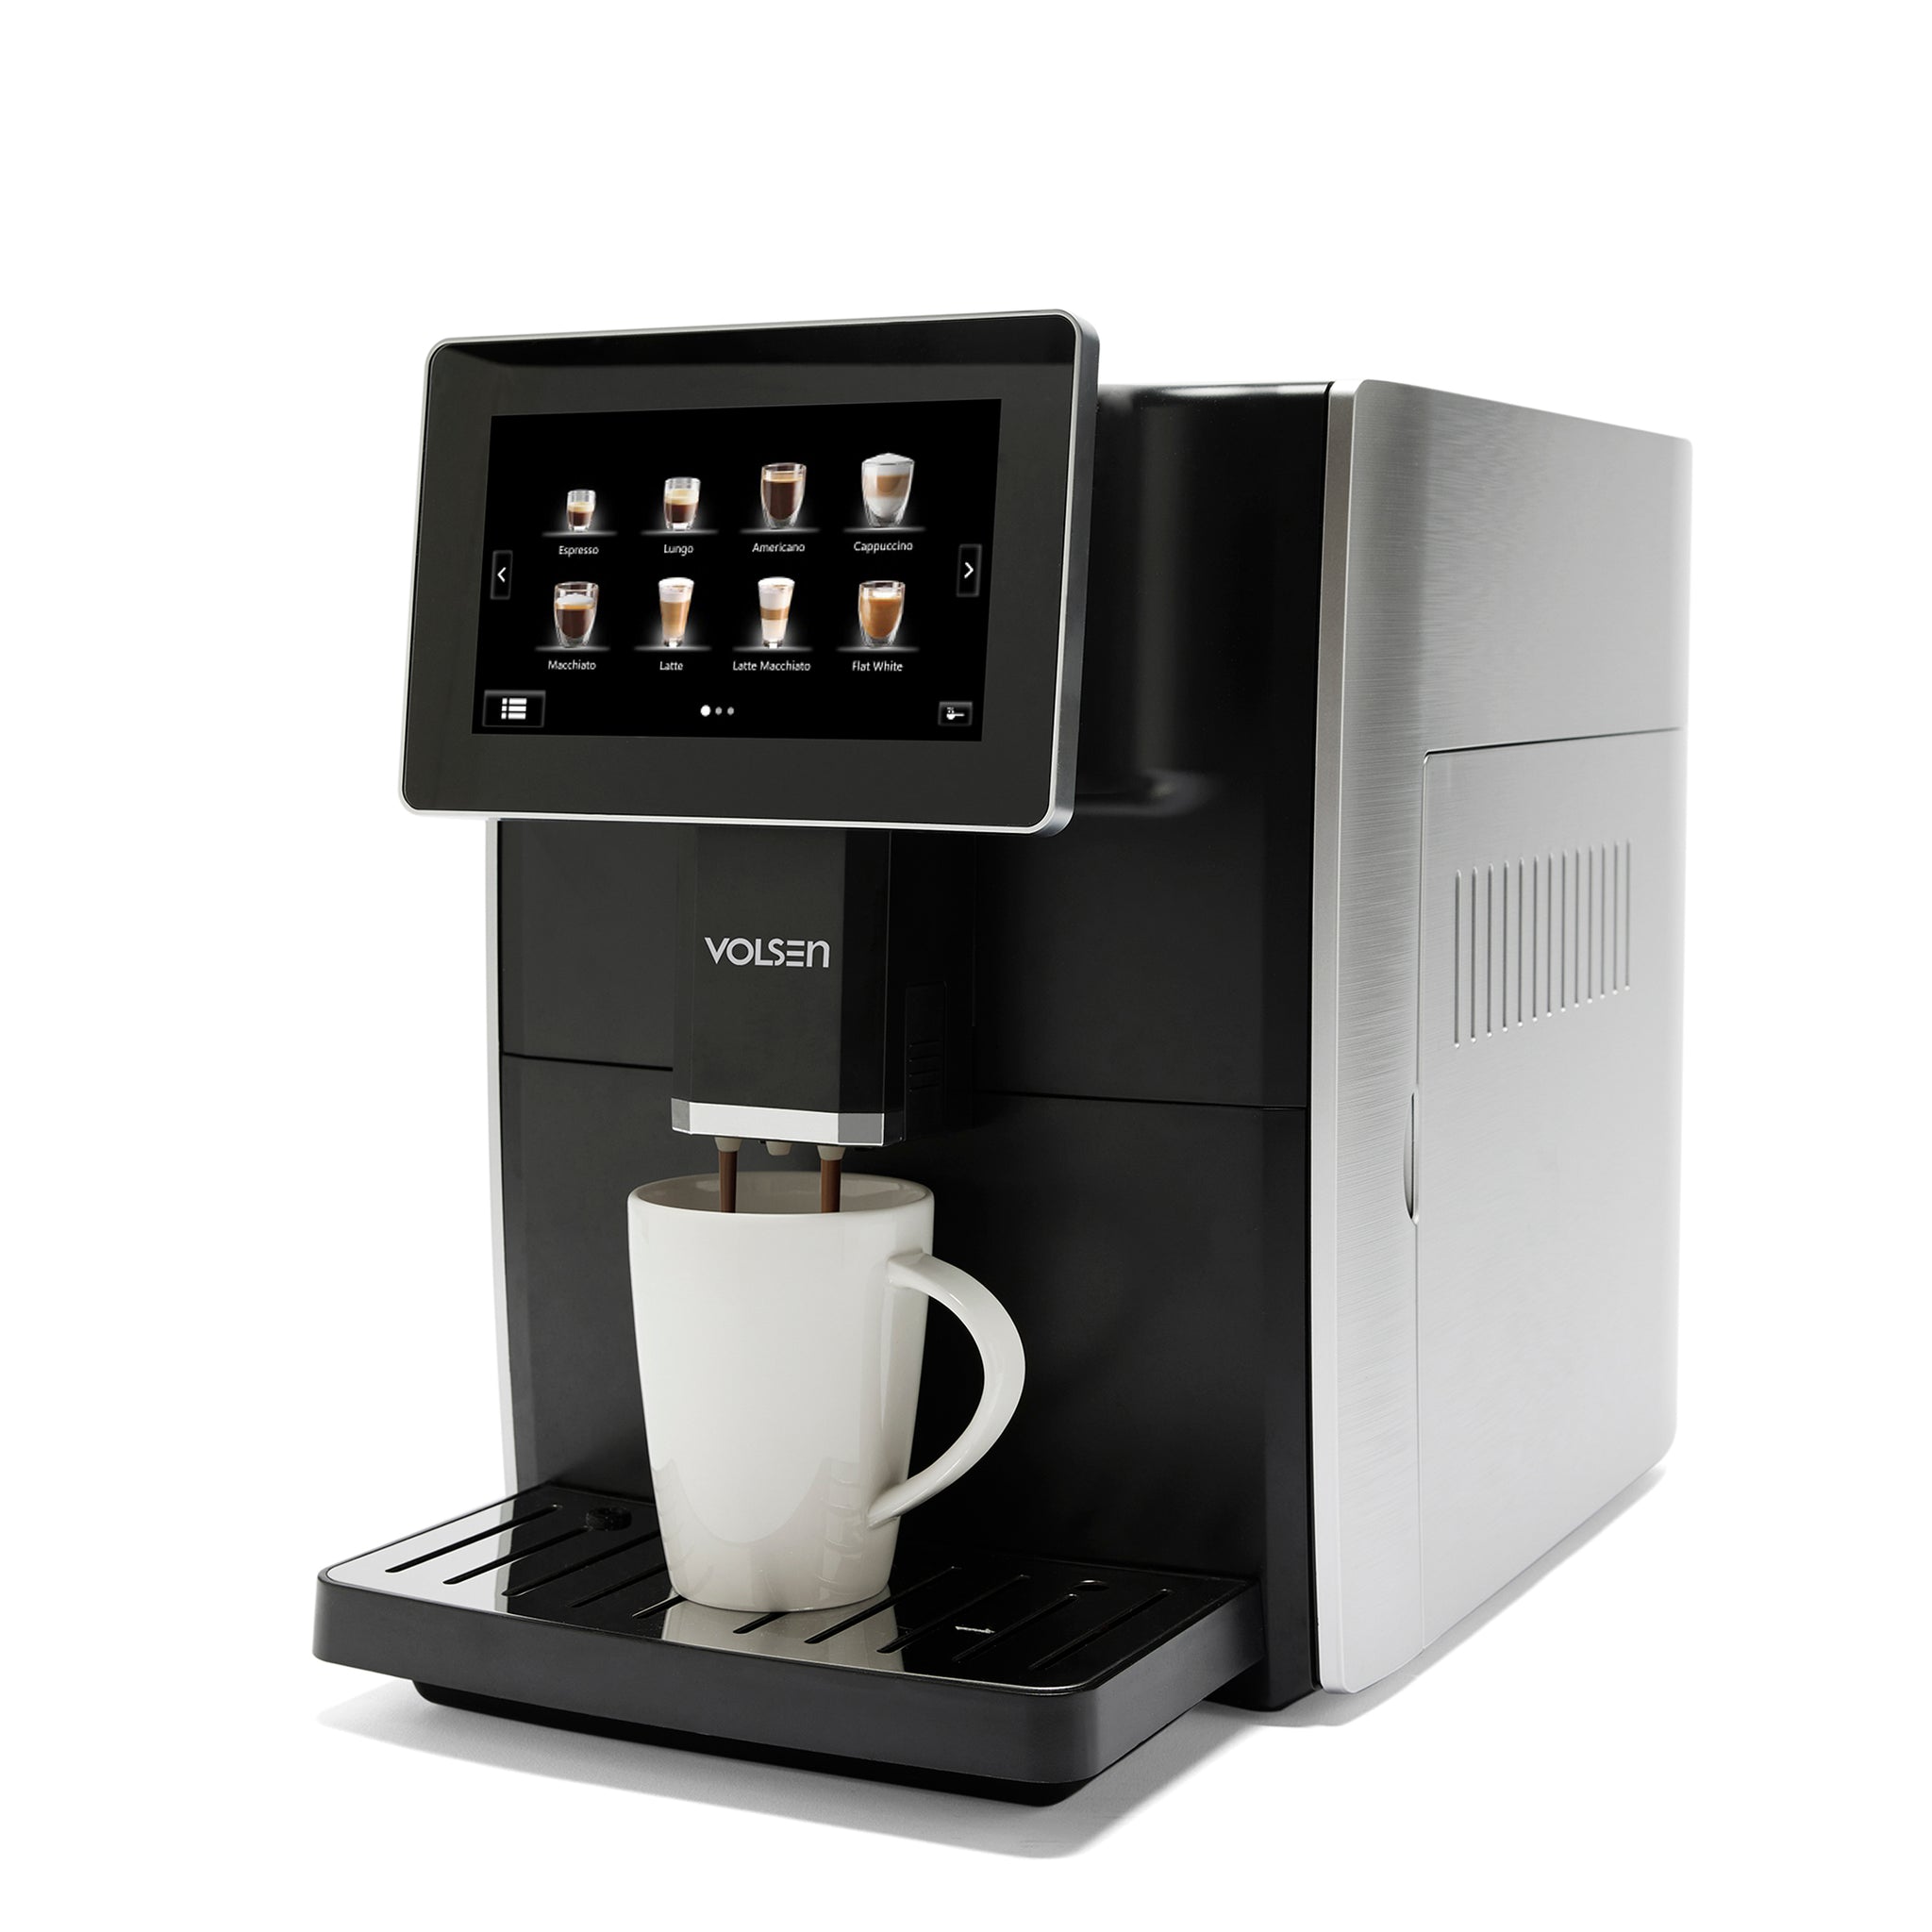 Is a smart coffee machine worth it?